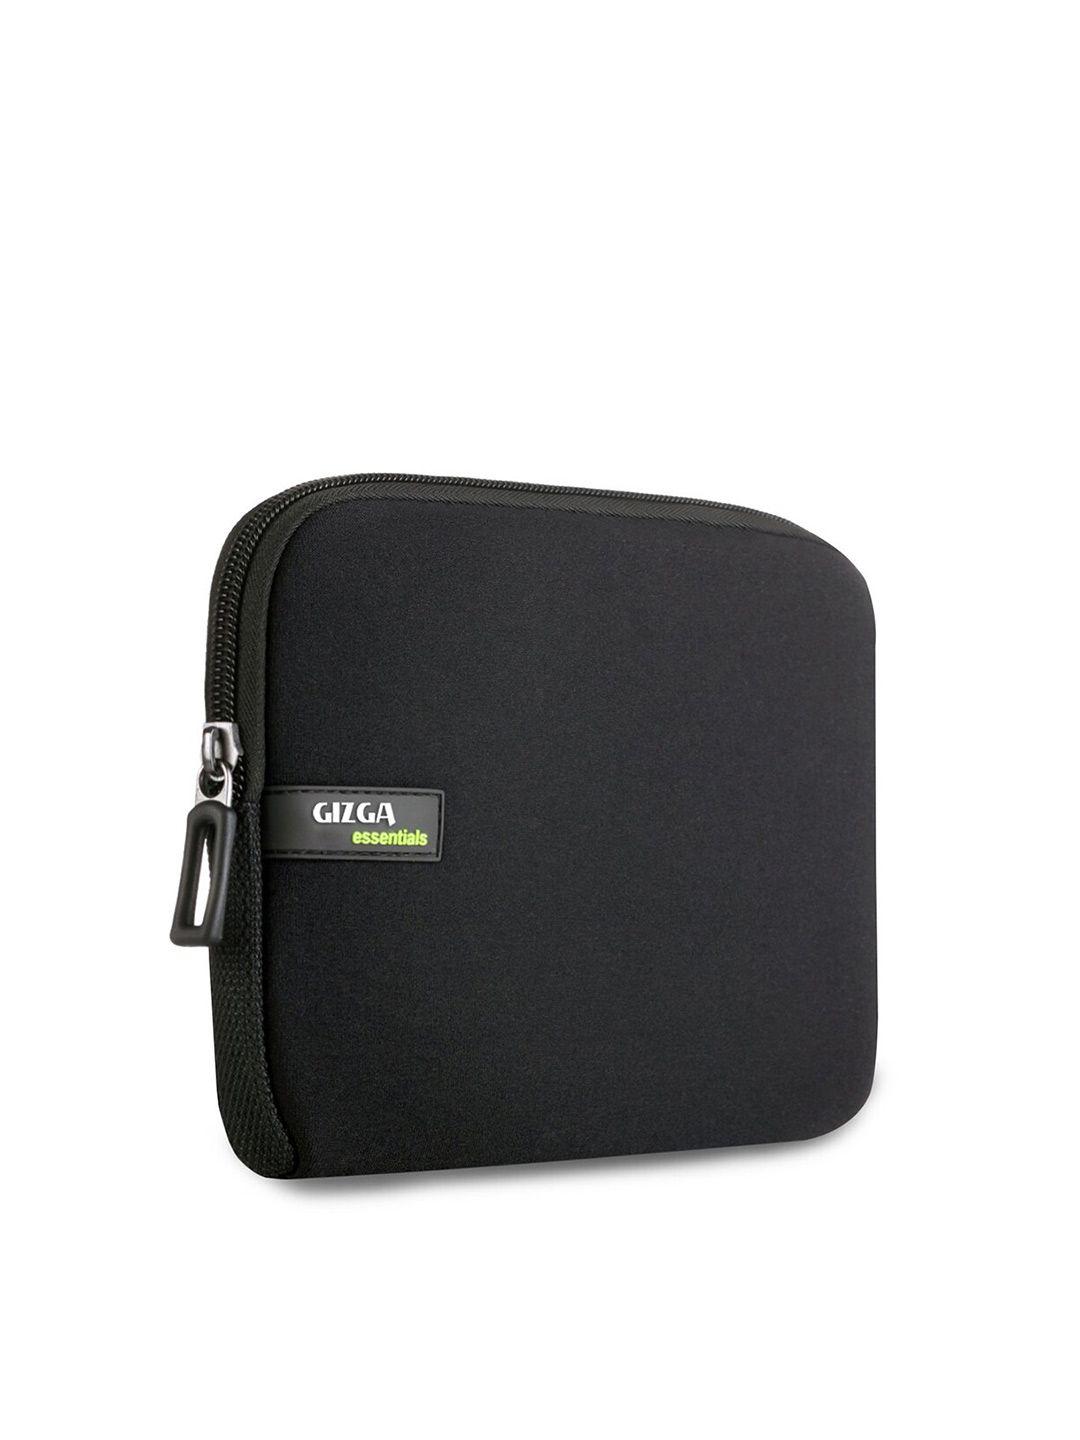 gizga-essentials-grey-water-resistant-laptop-bag